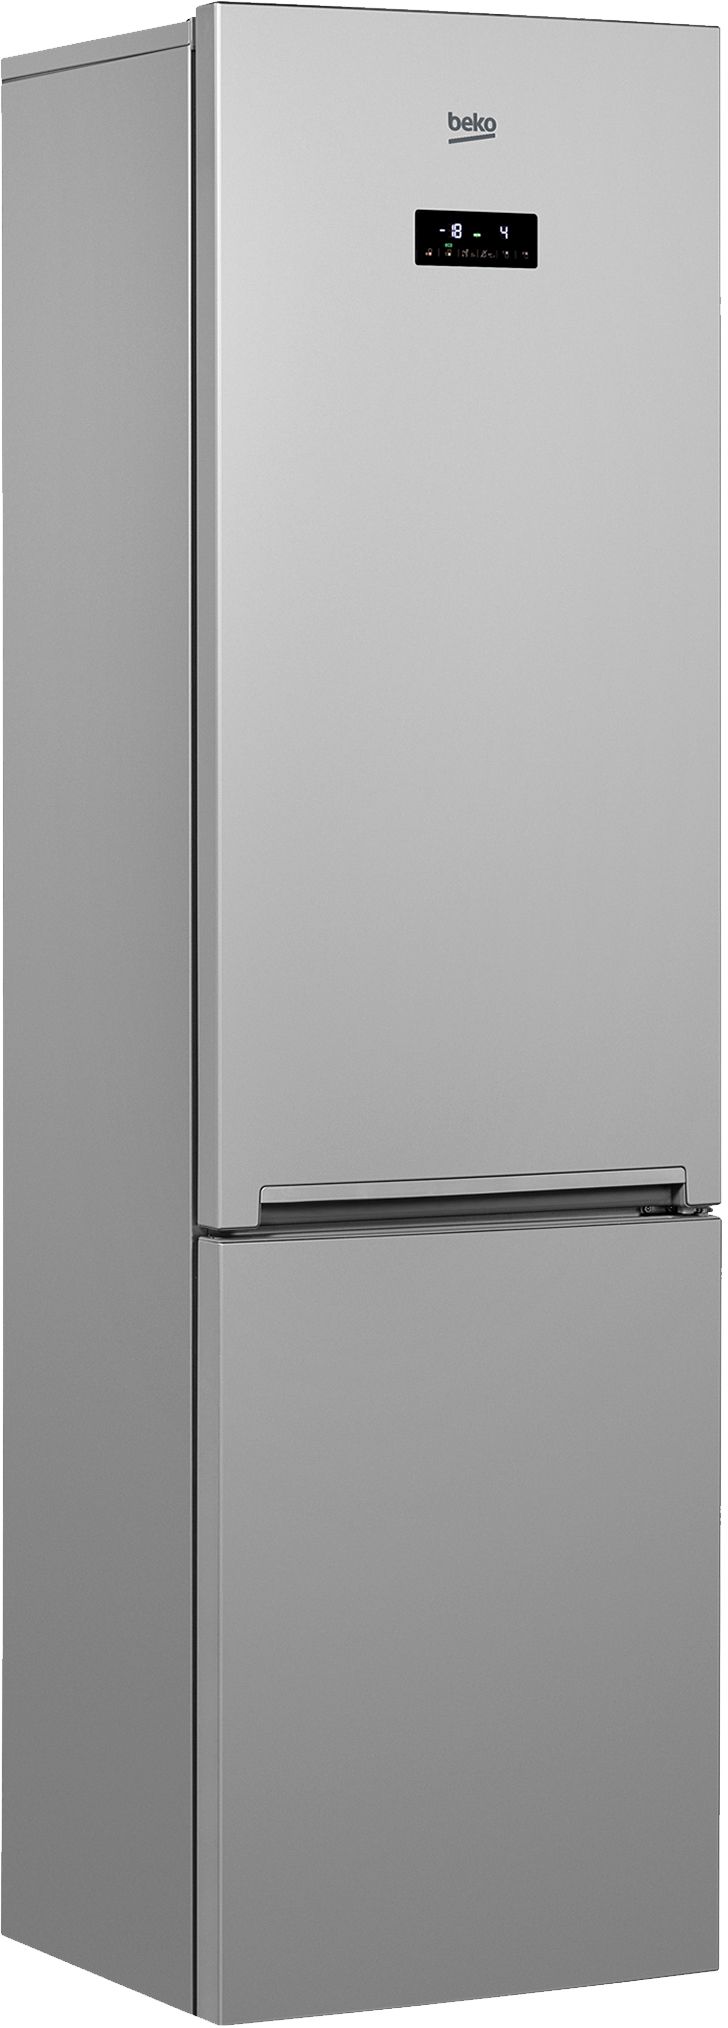 Двухкамерный холодильник BEKO RCNK356E20S